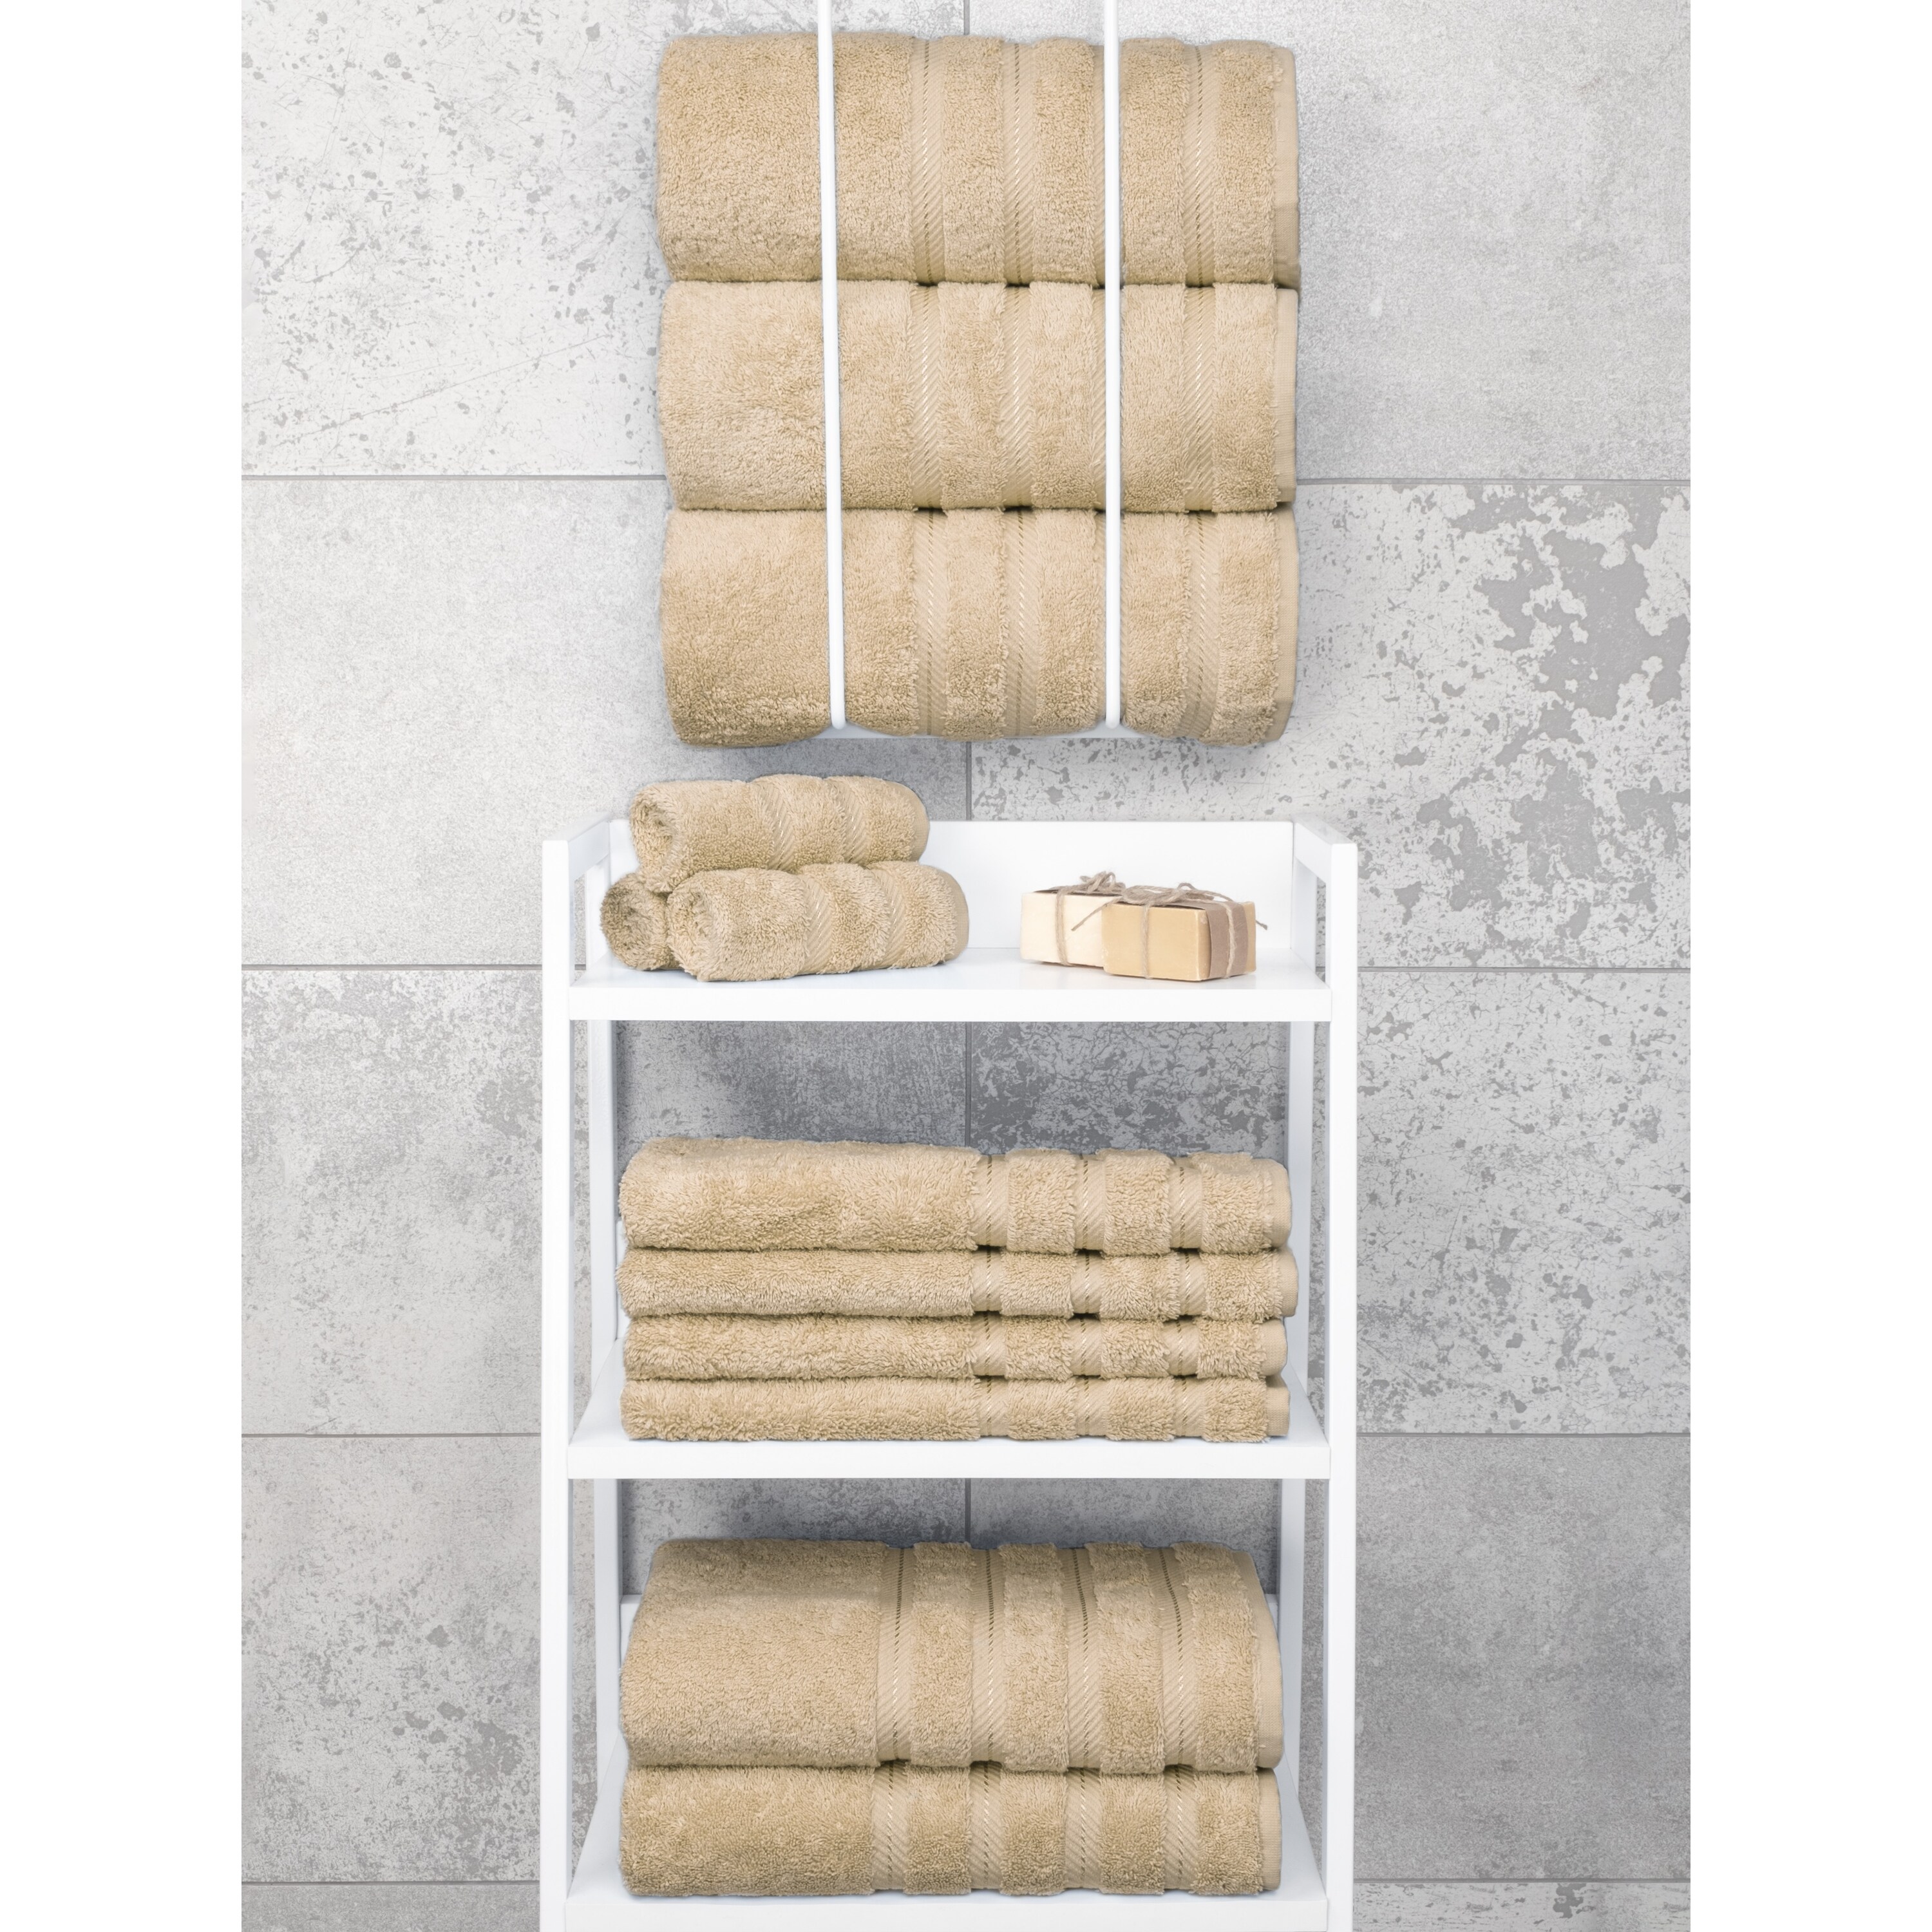 https://ak1.ostkcdn.com/images/products/is/images/direct/1d91f72c22725b578d1a5901d32492b71d62ec06/American-Soft-Linen-Turkish-Cotton-4-Piece-Bath-Towel-Set.jpg